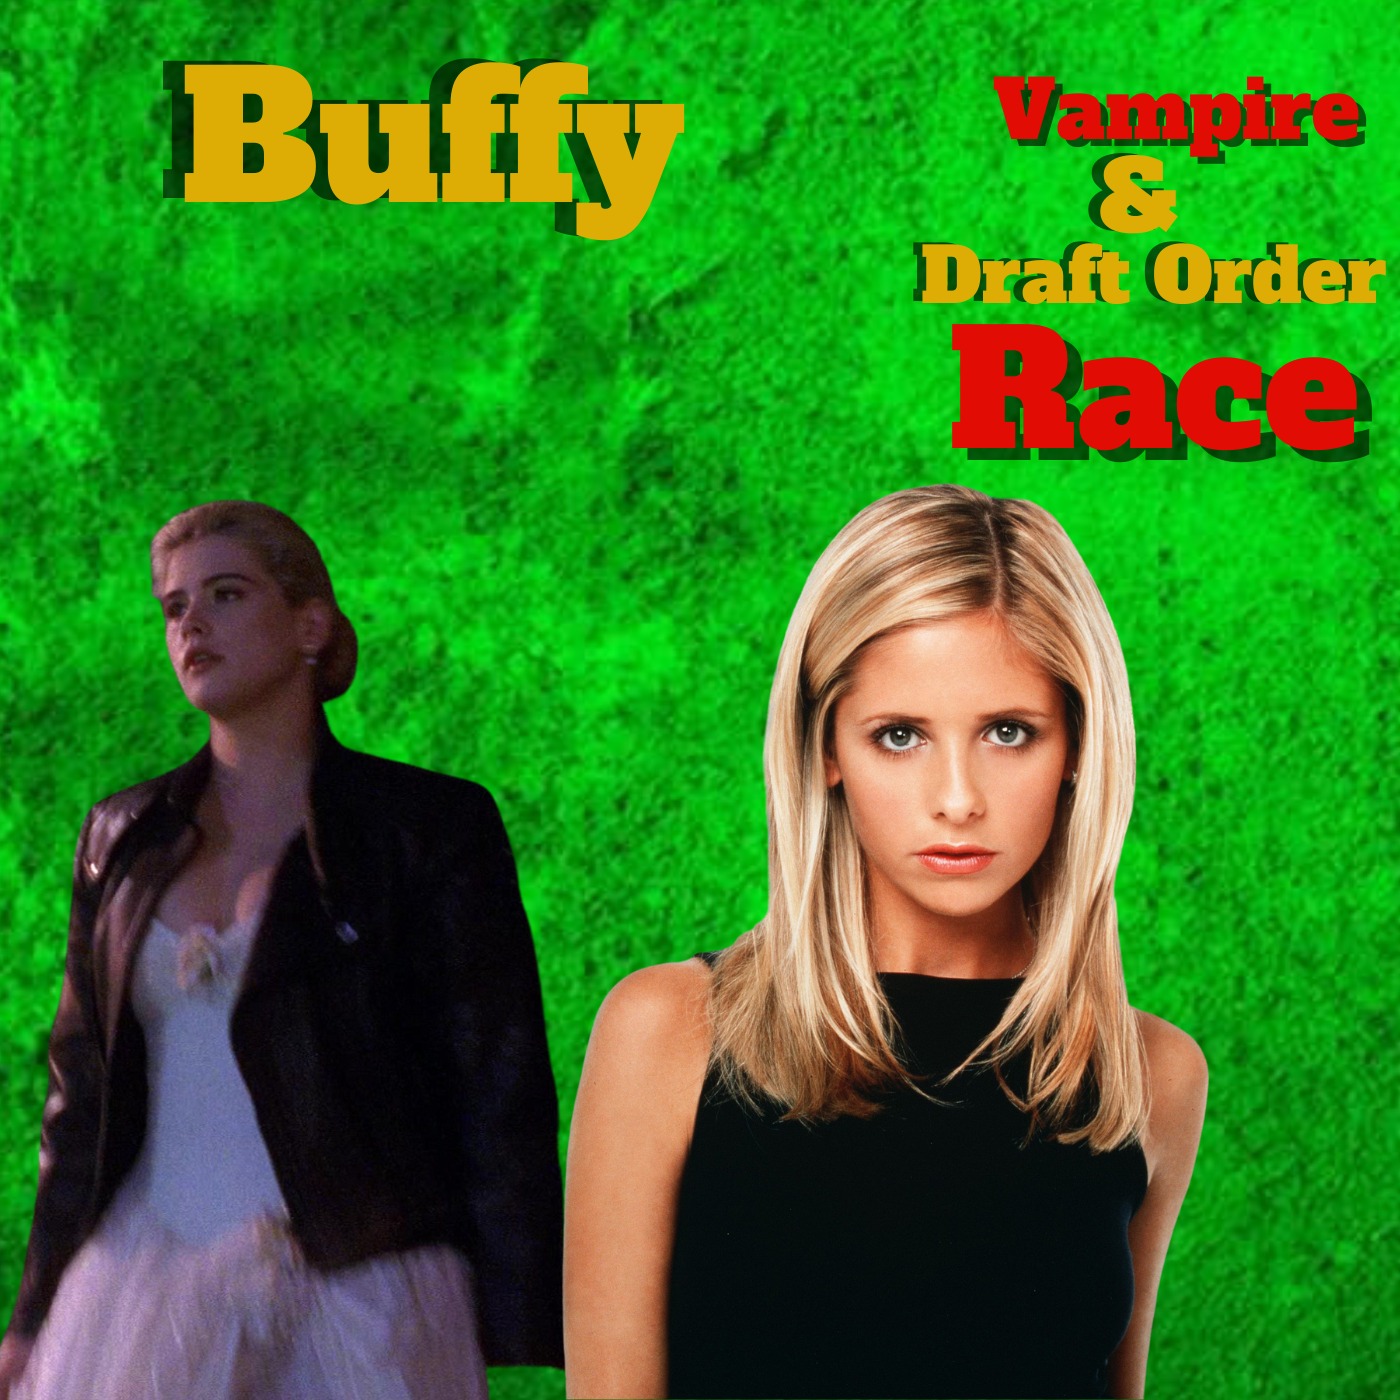 Buffy Vampire League Vampire & Draft Order Race Image